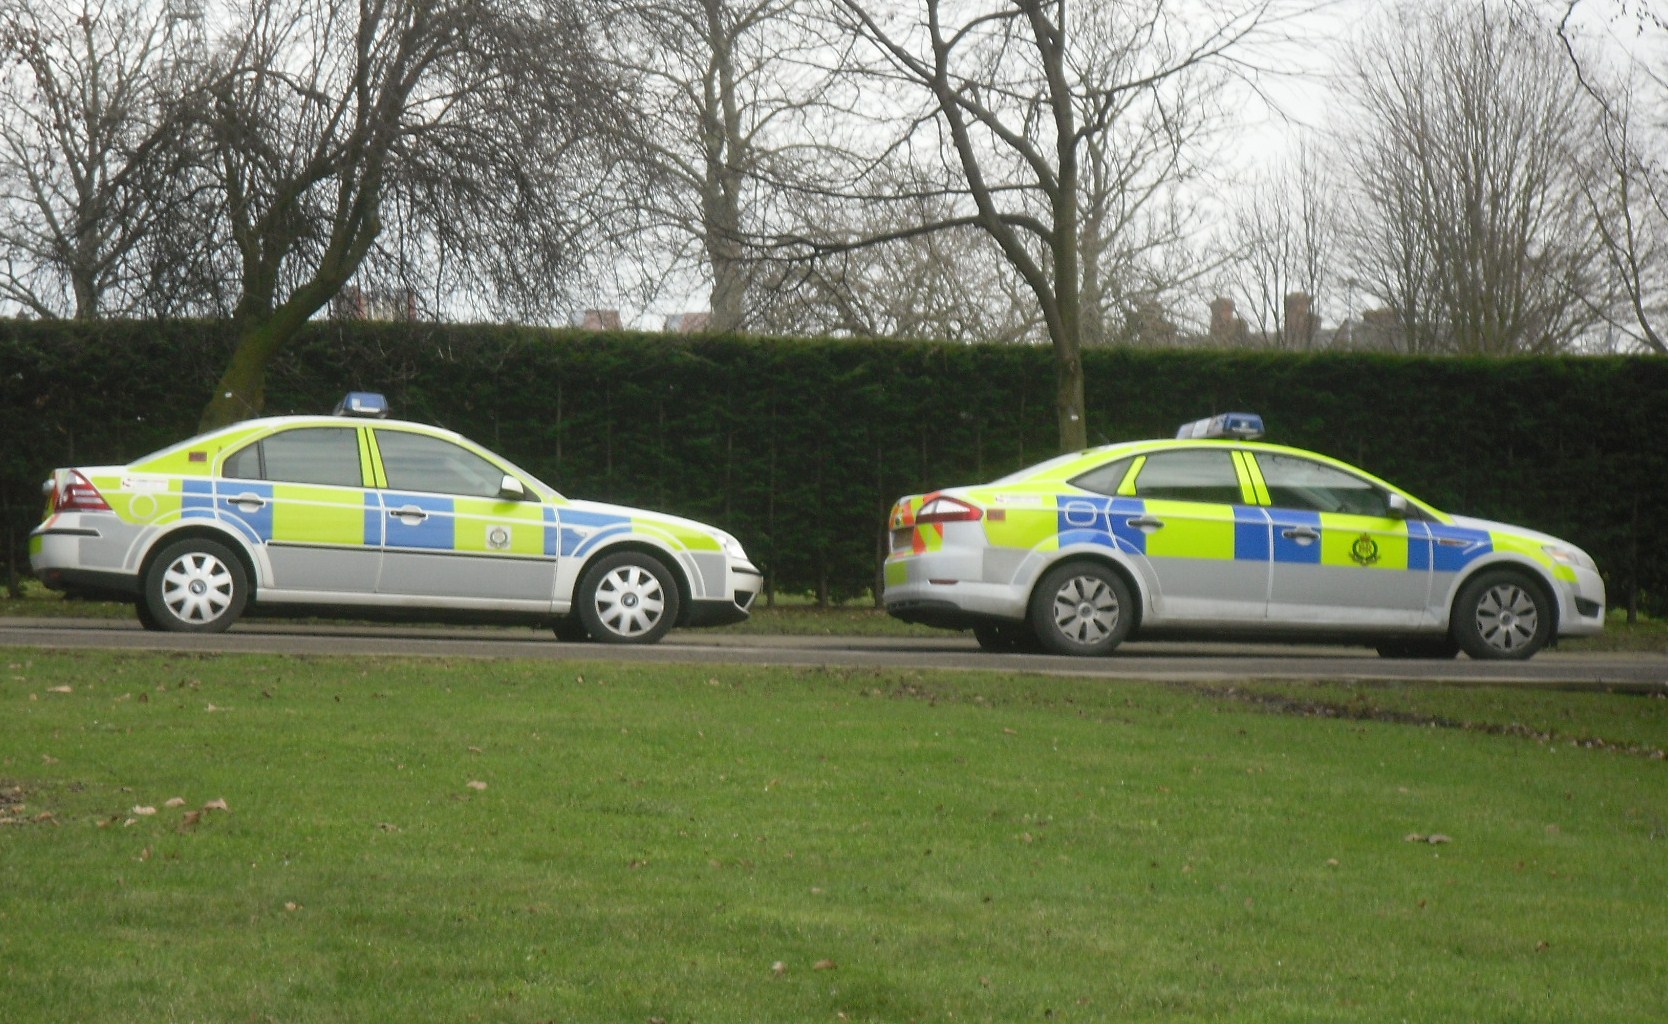 Royal Military Police cars